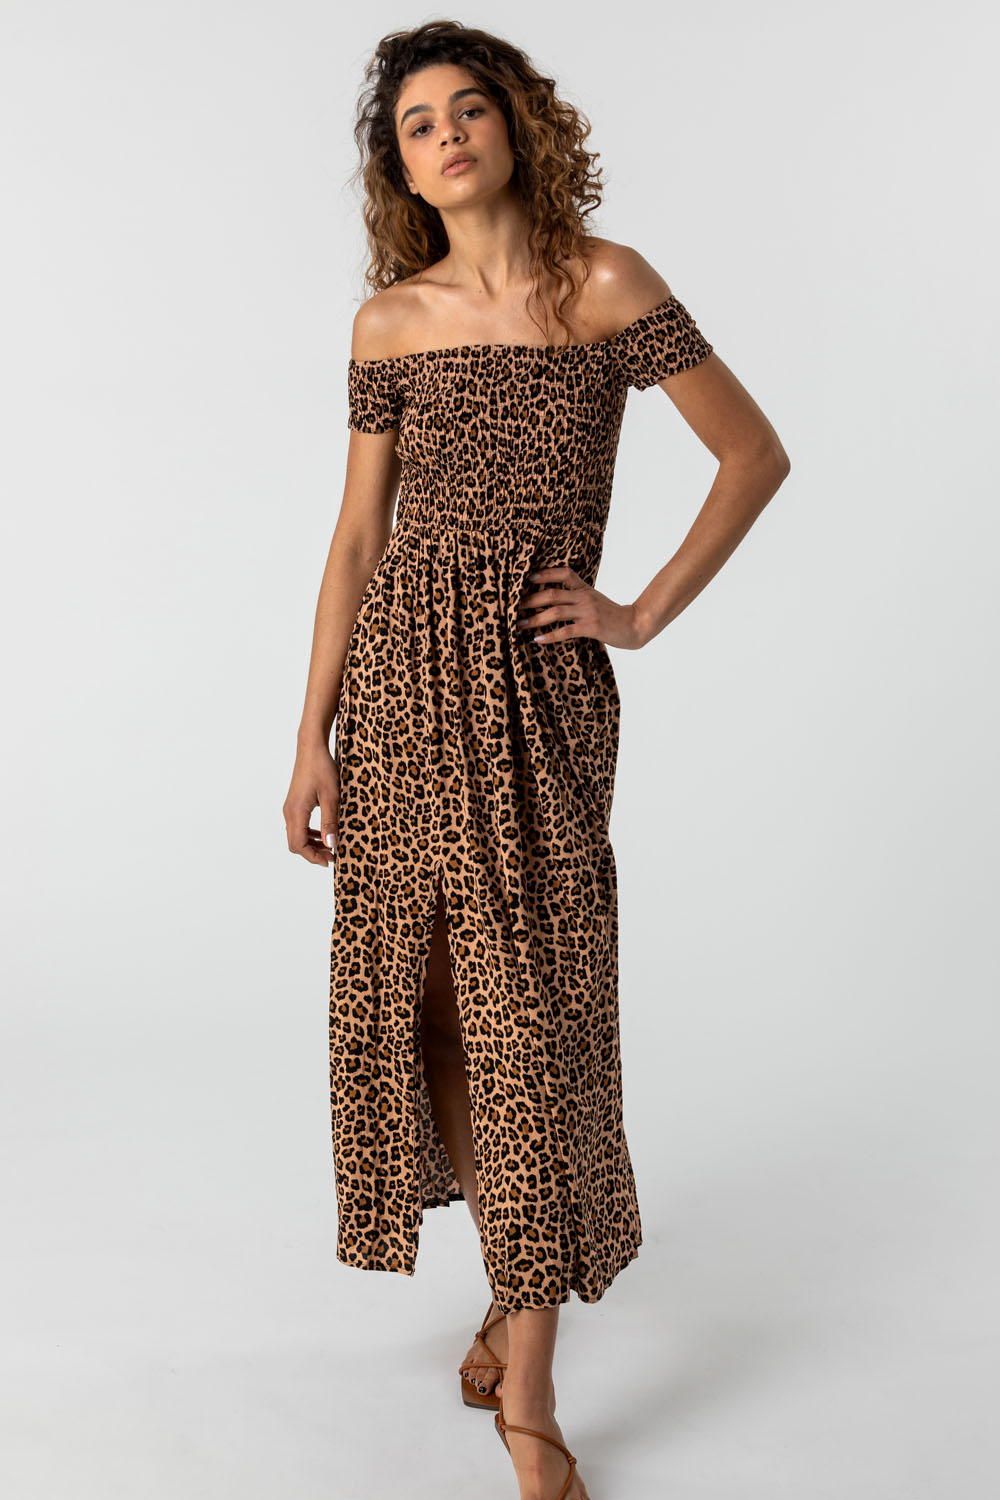 Brown Shirred Leopard Print Bardot Dress, Image 3 of 5